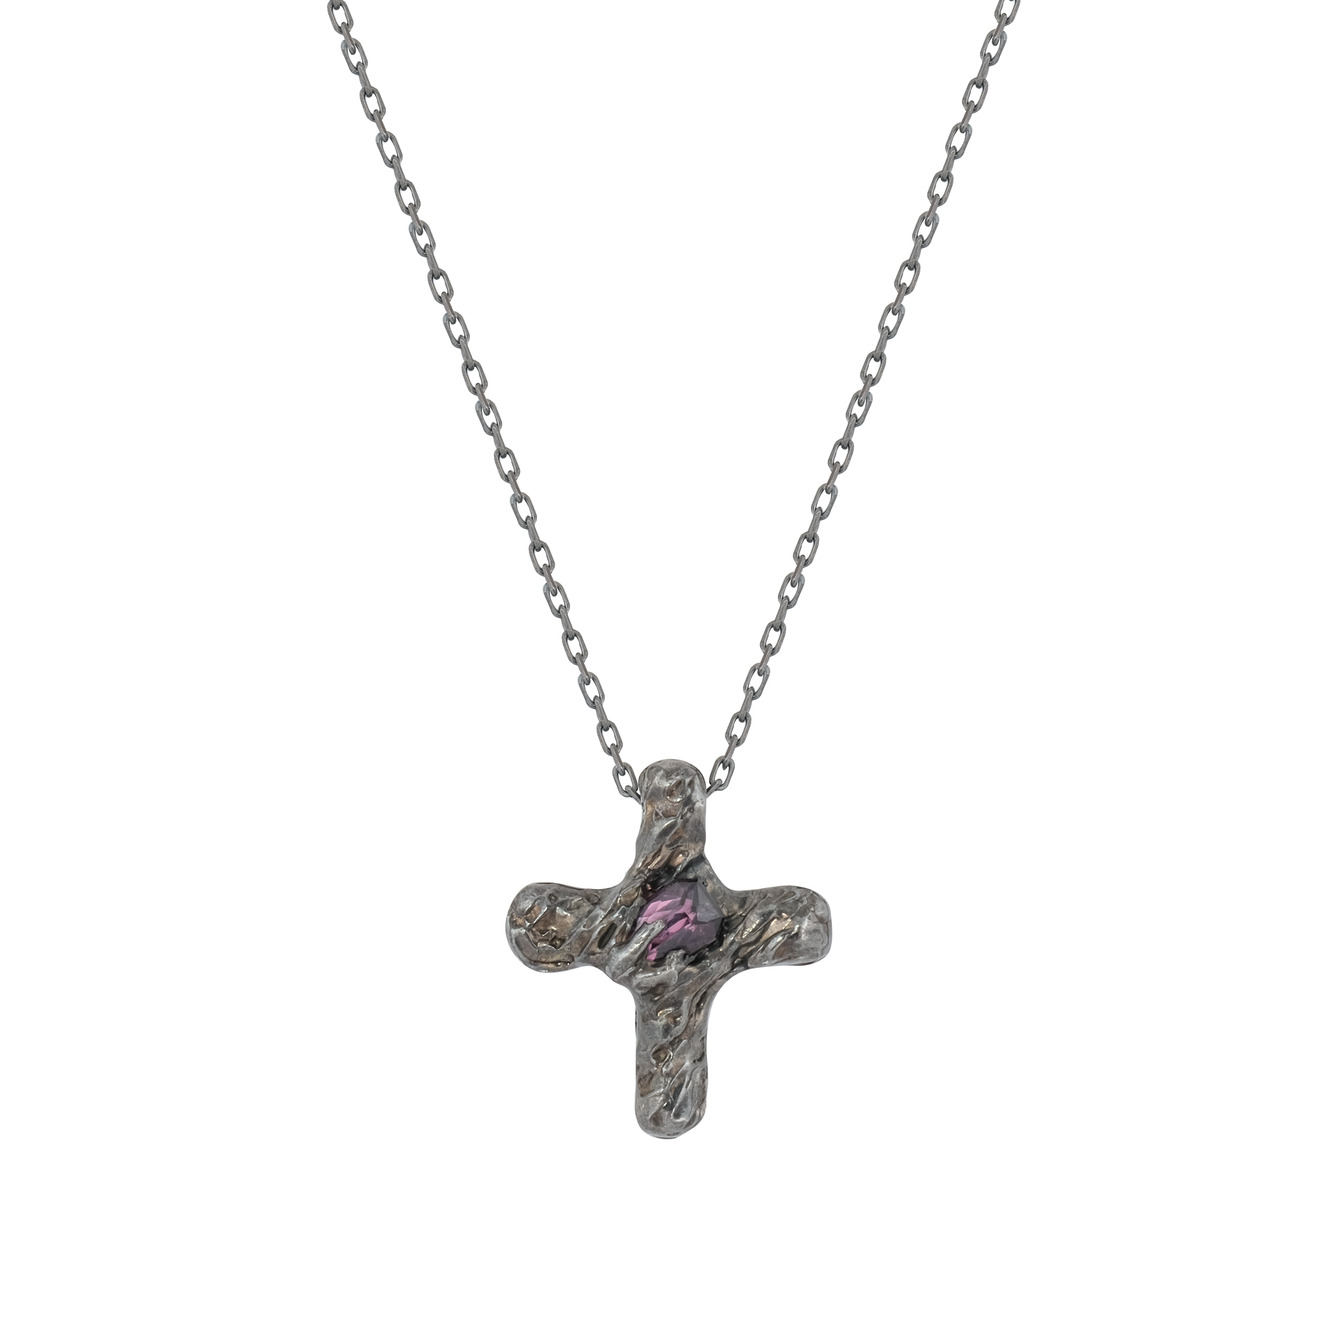 kintsugi jewelry кулон крест из серебра со вставкой из шпинели Kintsugi Jewelry Кулон крест из серебра со вставкой из шпинели